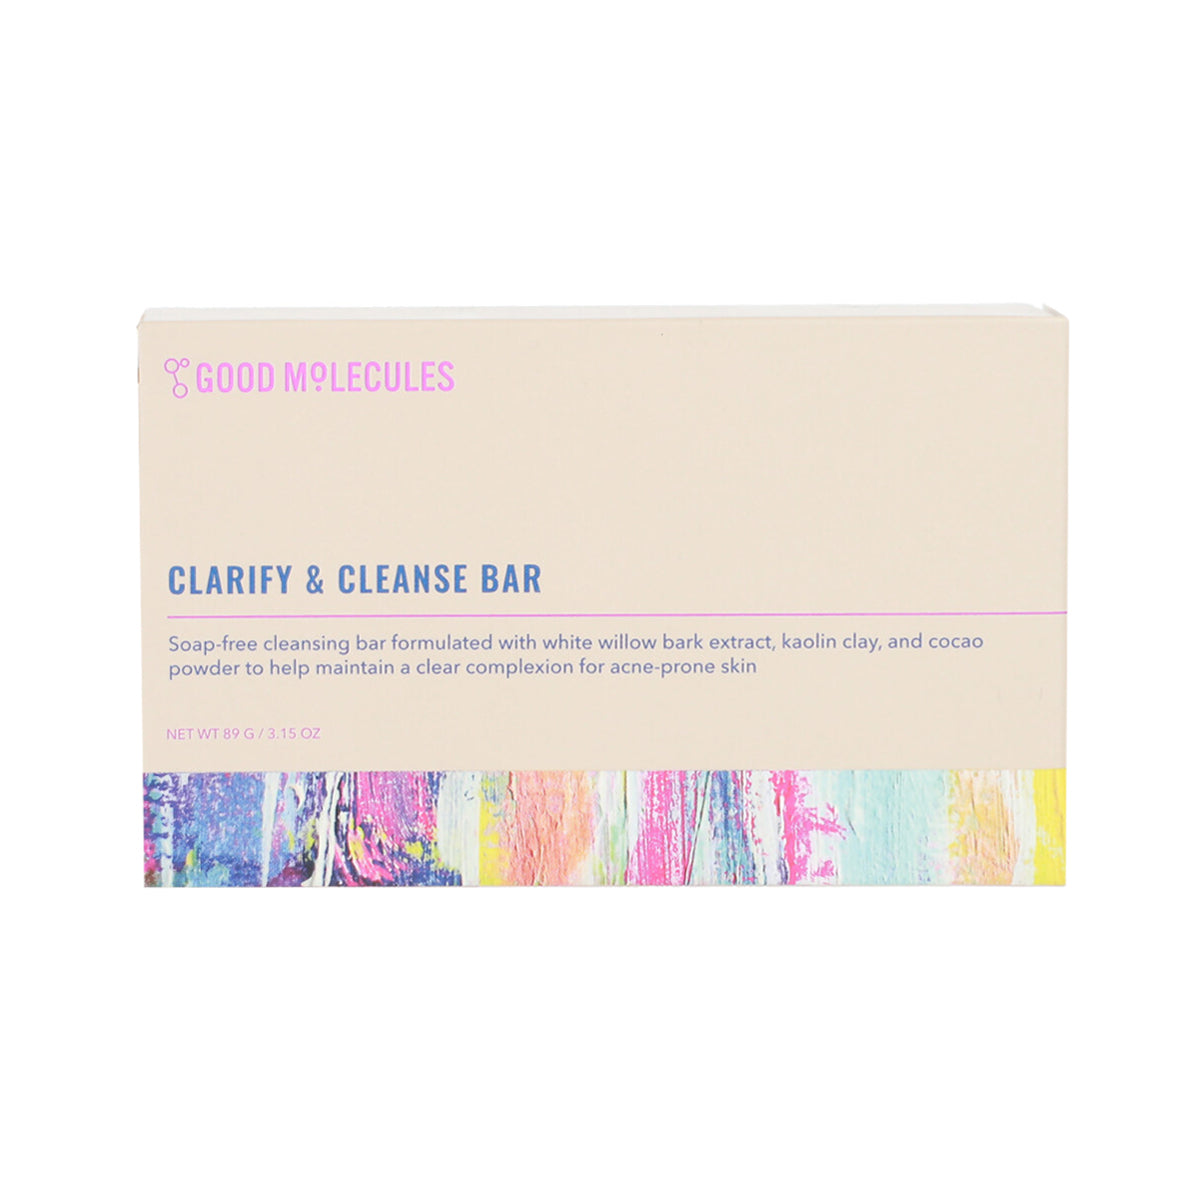 Clarify & Cleanse Bar